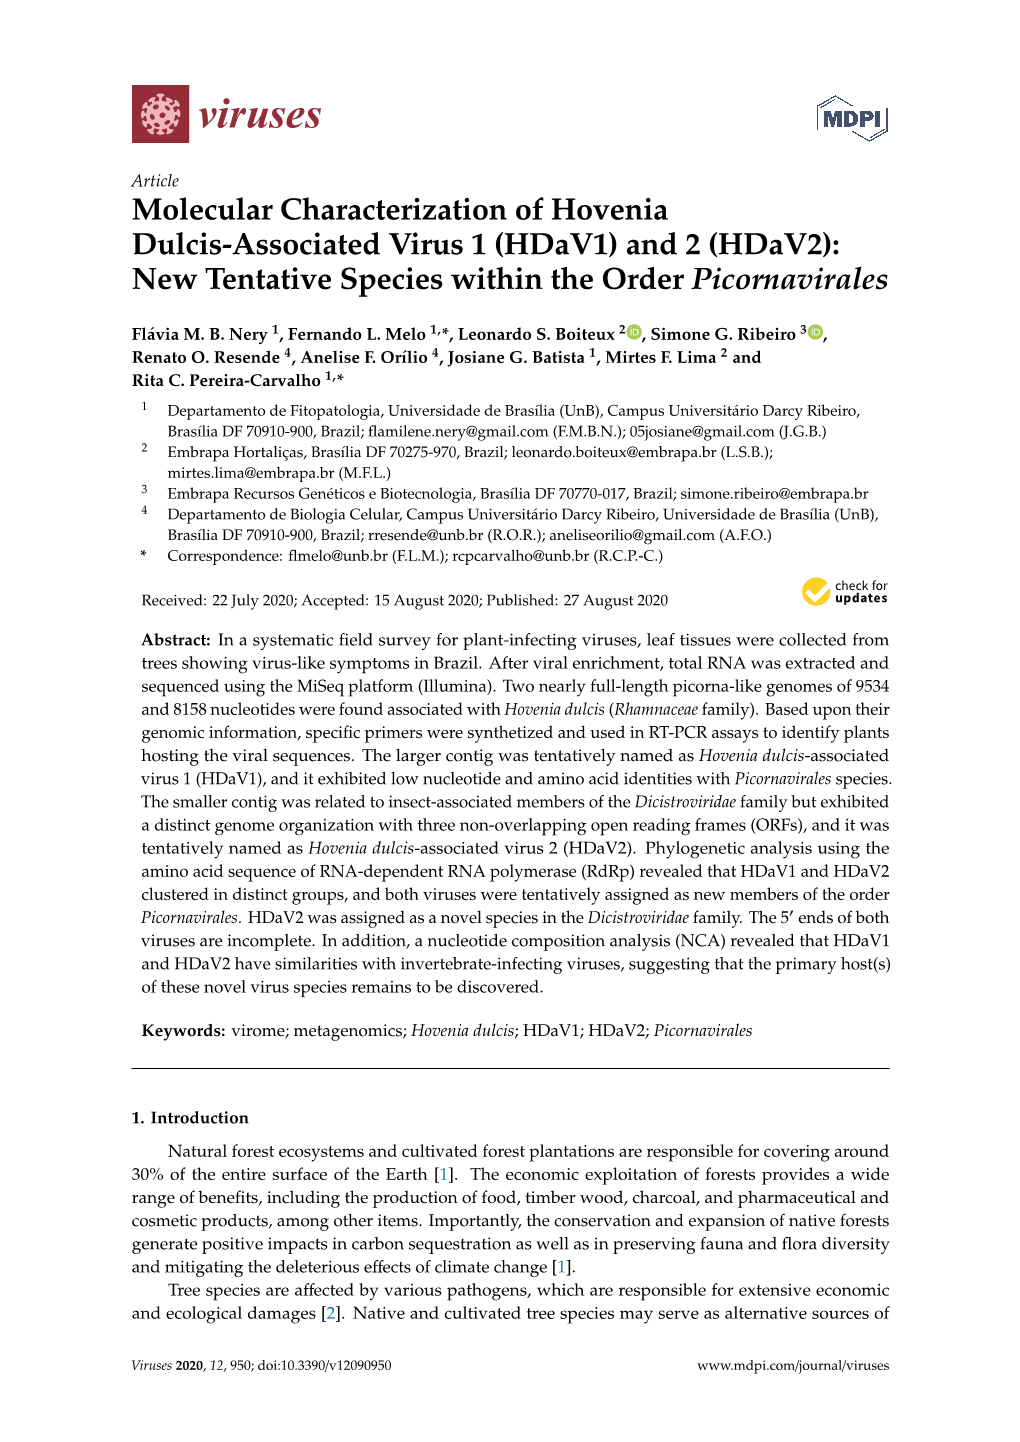 Molecular Characterization of Hovenia Dulcis-Associated Virus 1 (Hdav1) and 2 (Hdav2): New Tentative Species Within the Order Picornavirales